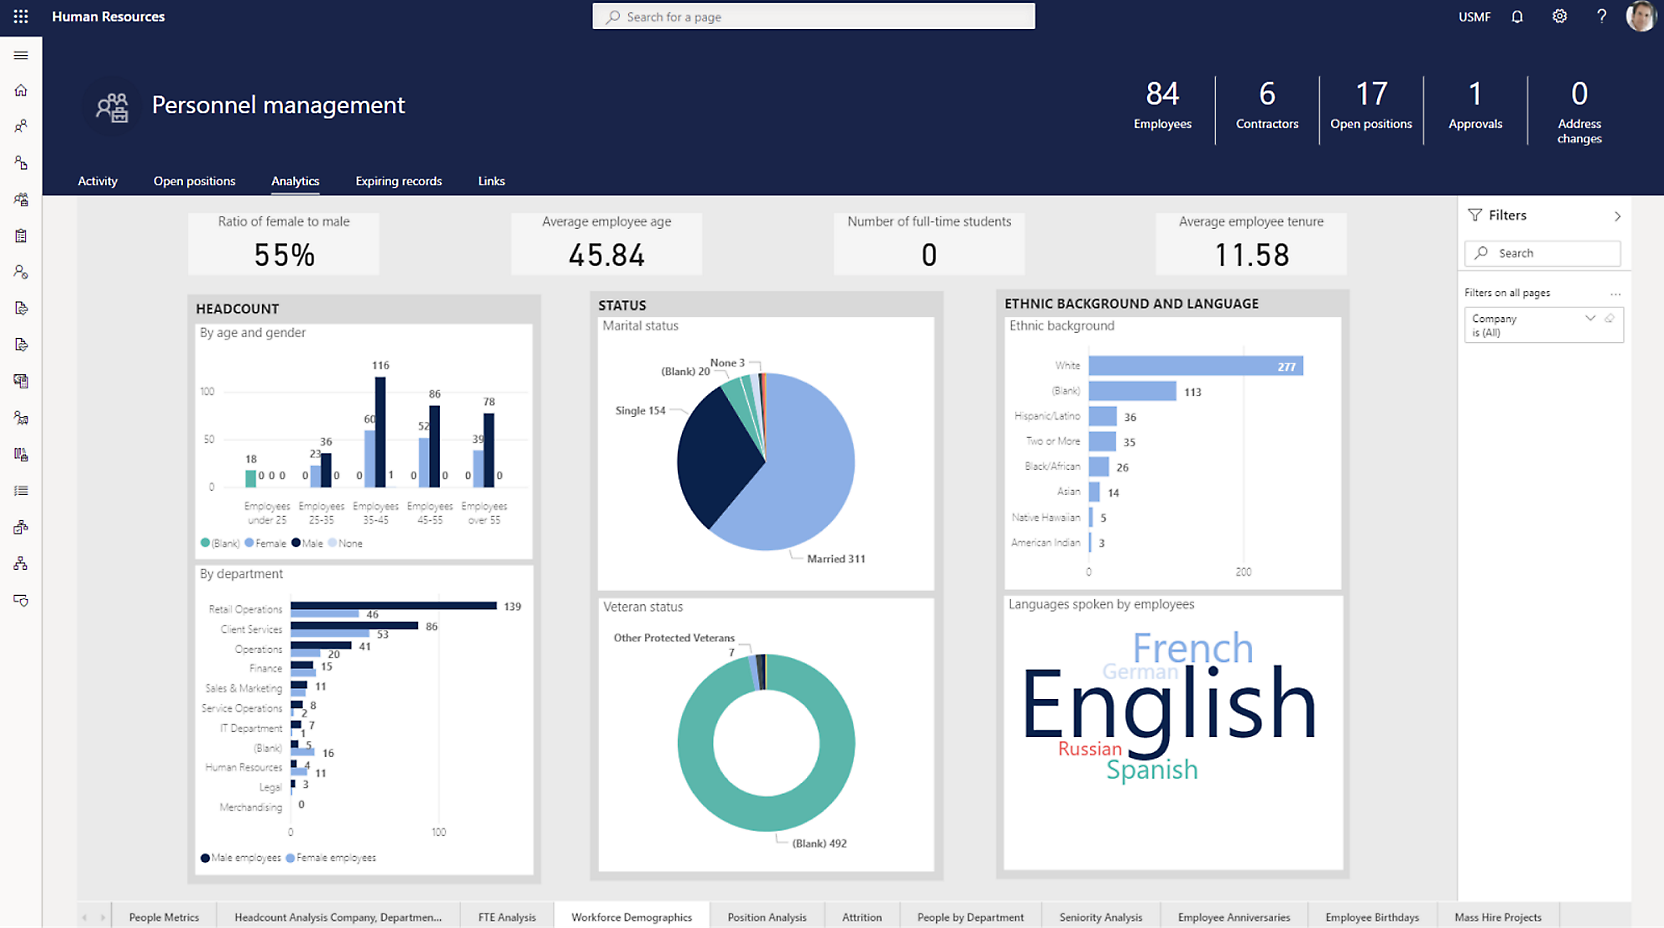 Dashboard showing personnel management statistics, including headcount, average tenure, status distribution